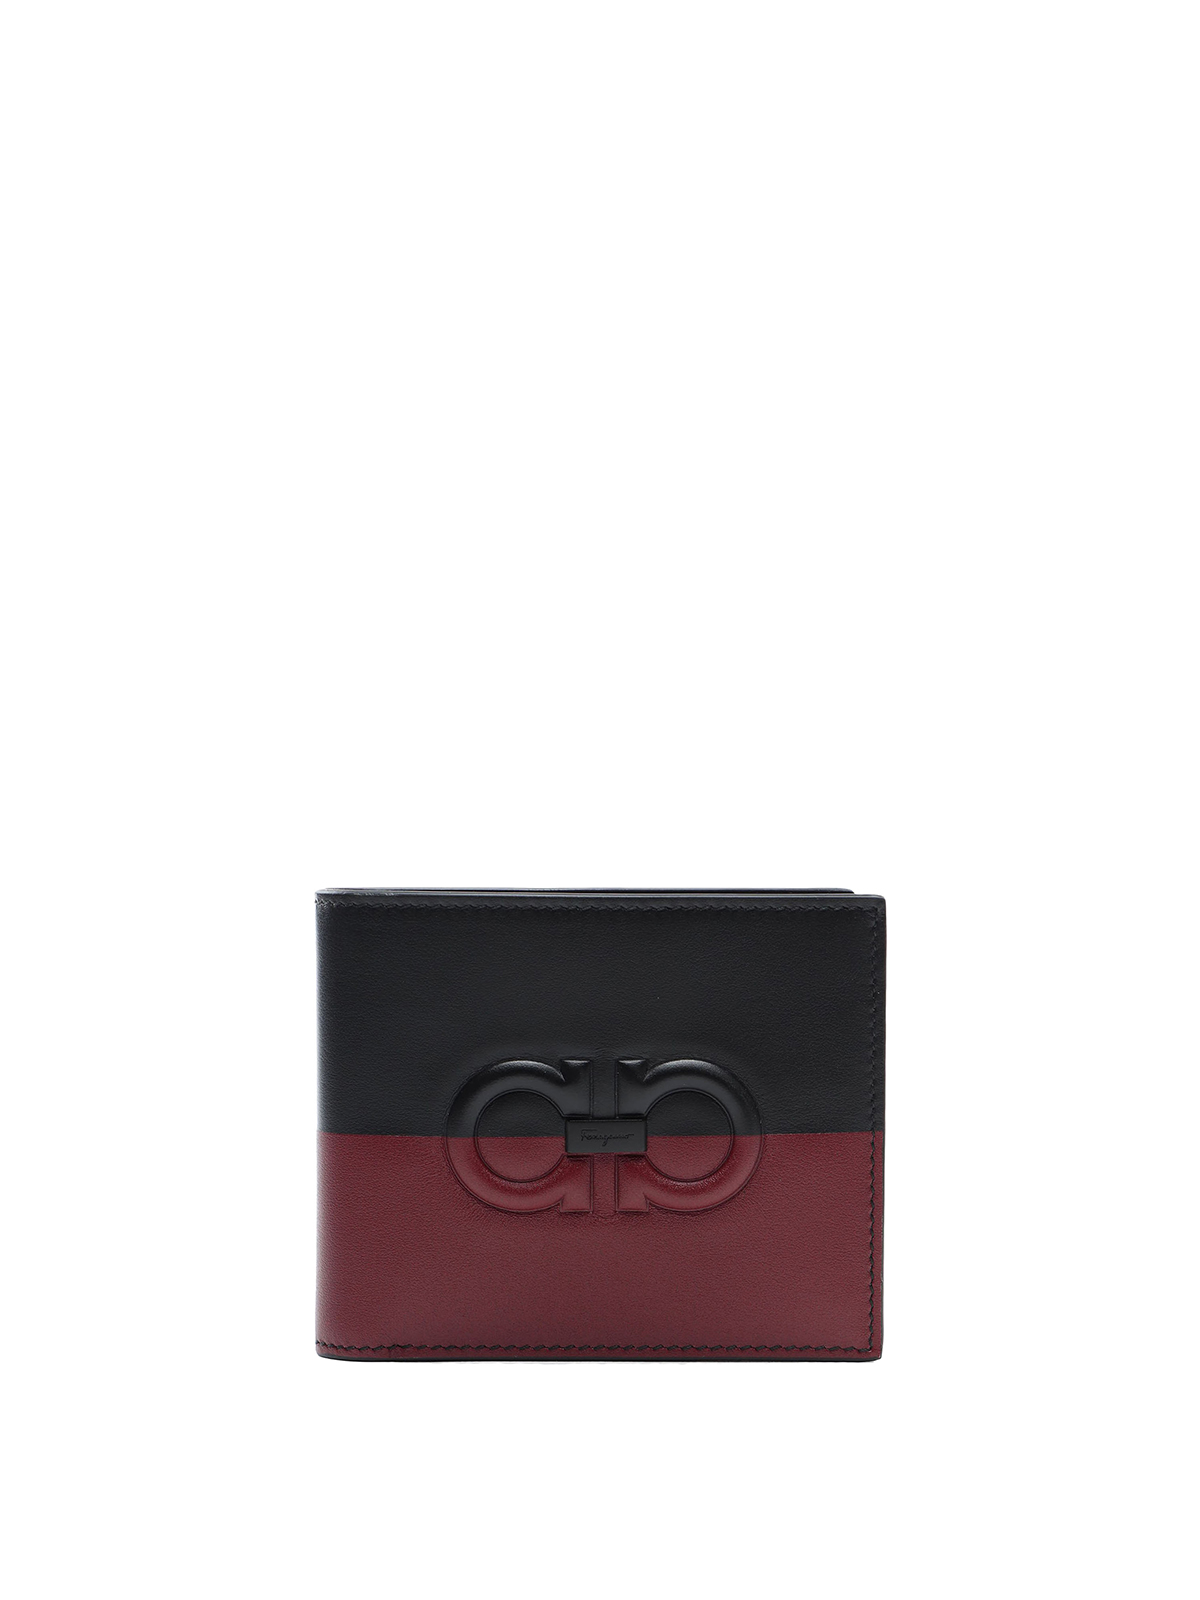 Salvatore Ferragamo Men's Bifold Leather Wallet